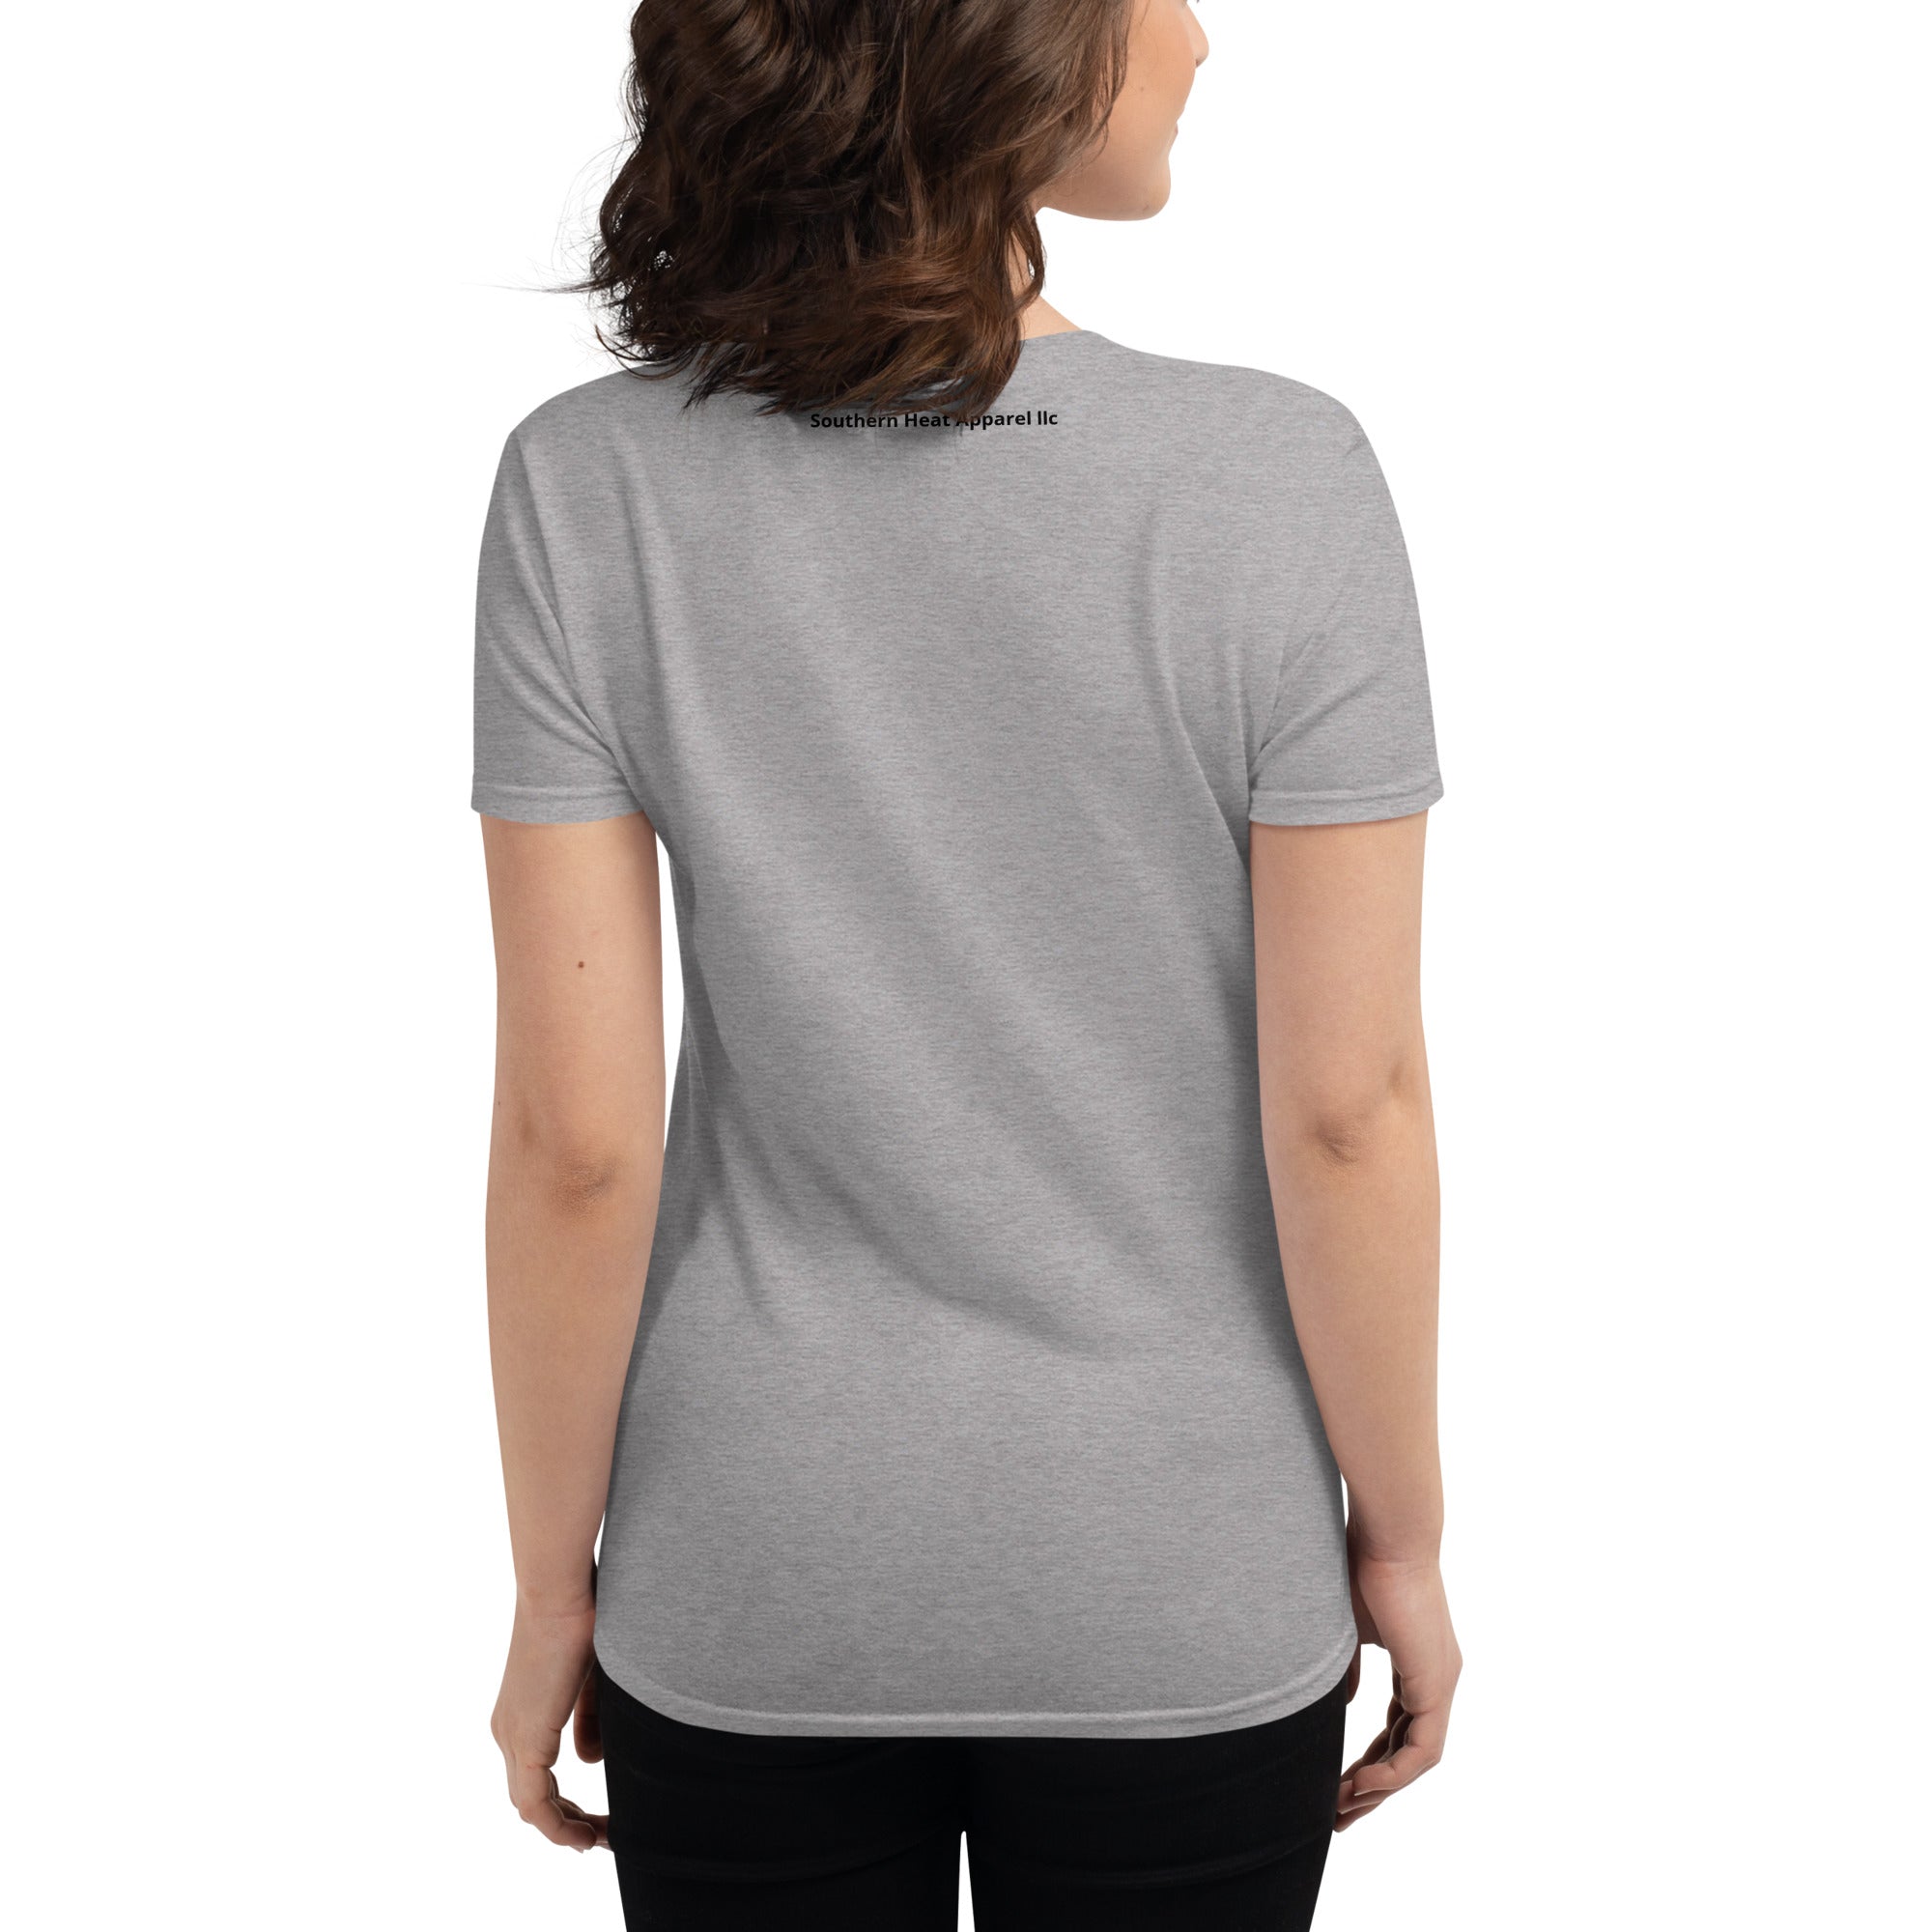 Just Country-Women's short sleeve t-shirt